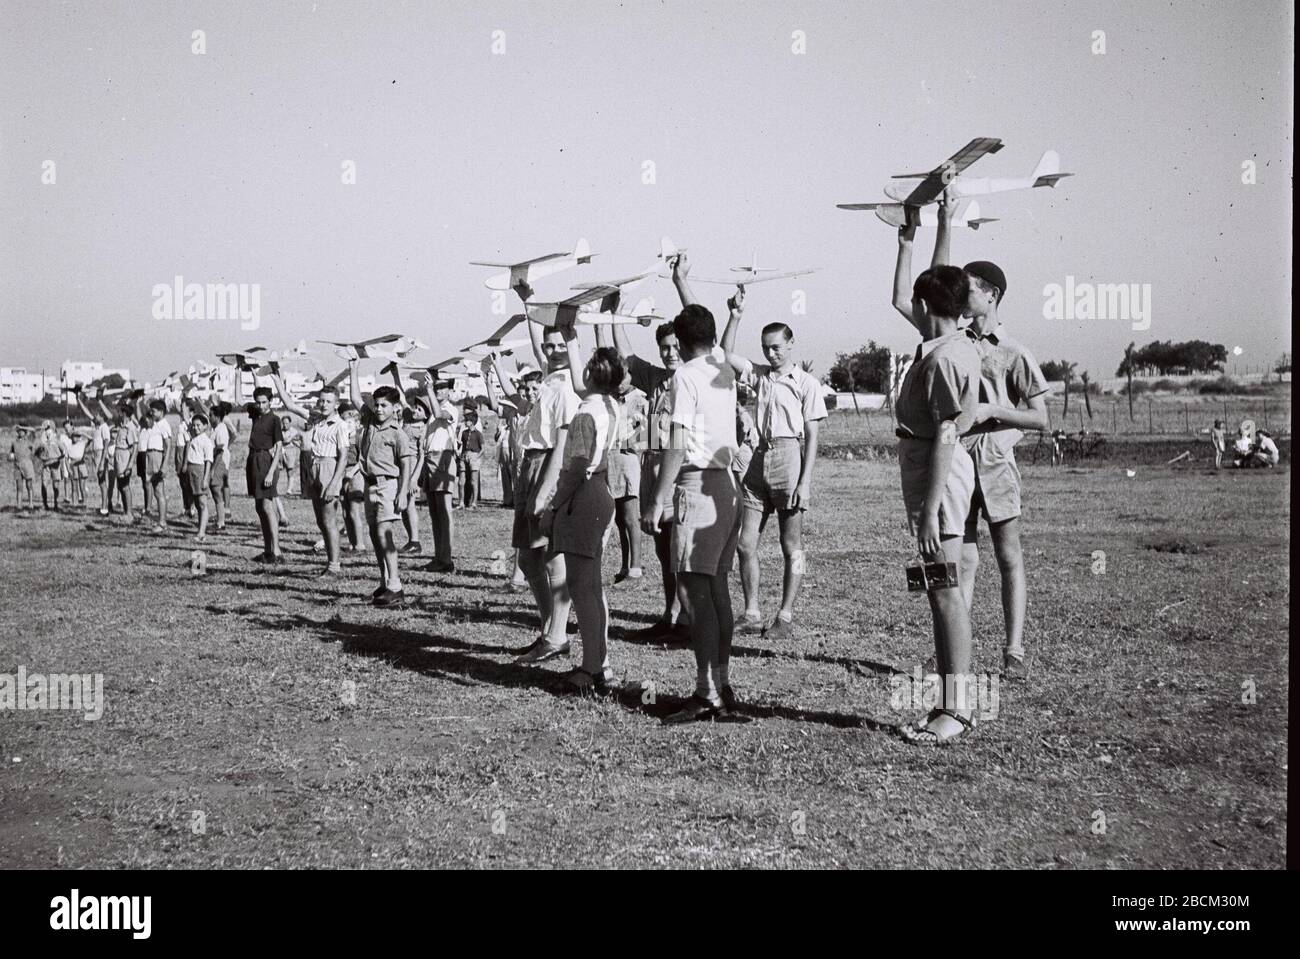 English School Boys With Their Gliders Ready For The Start Of The Contest At Kiriat Meir Field Outside Tel Aviv U U O I O E O U U E E O E U C O U E O I I I U O I U C O U